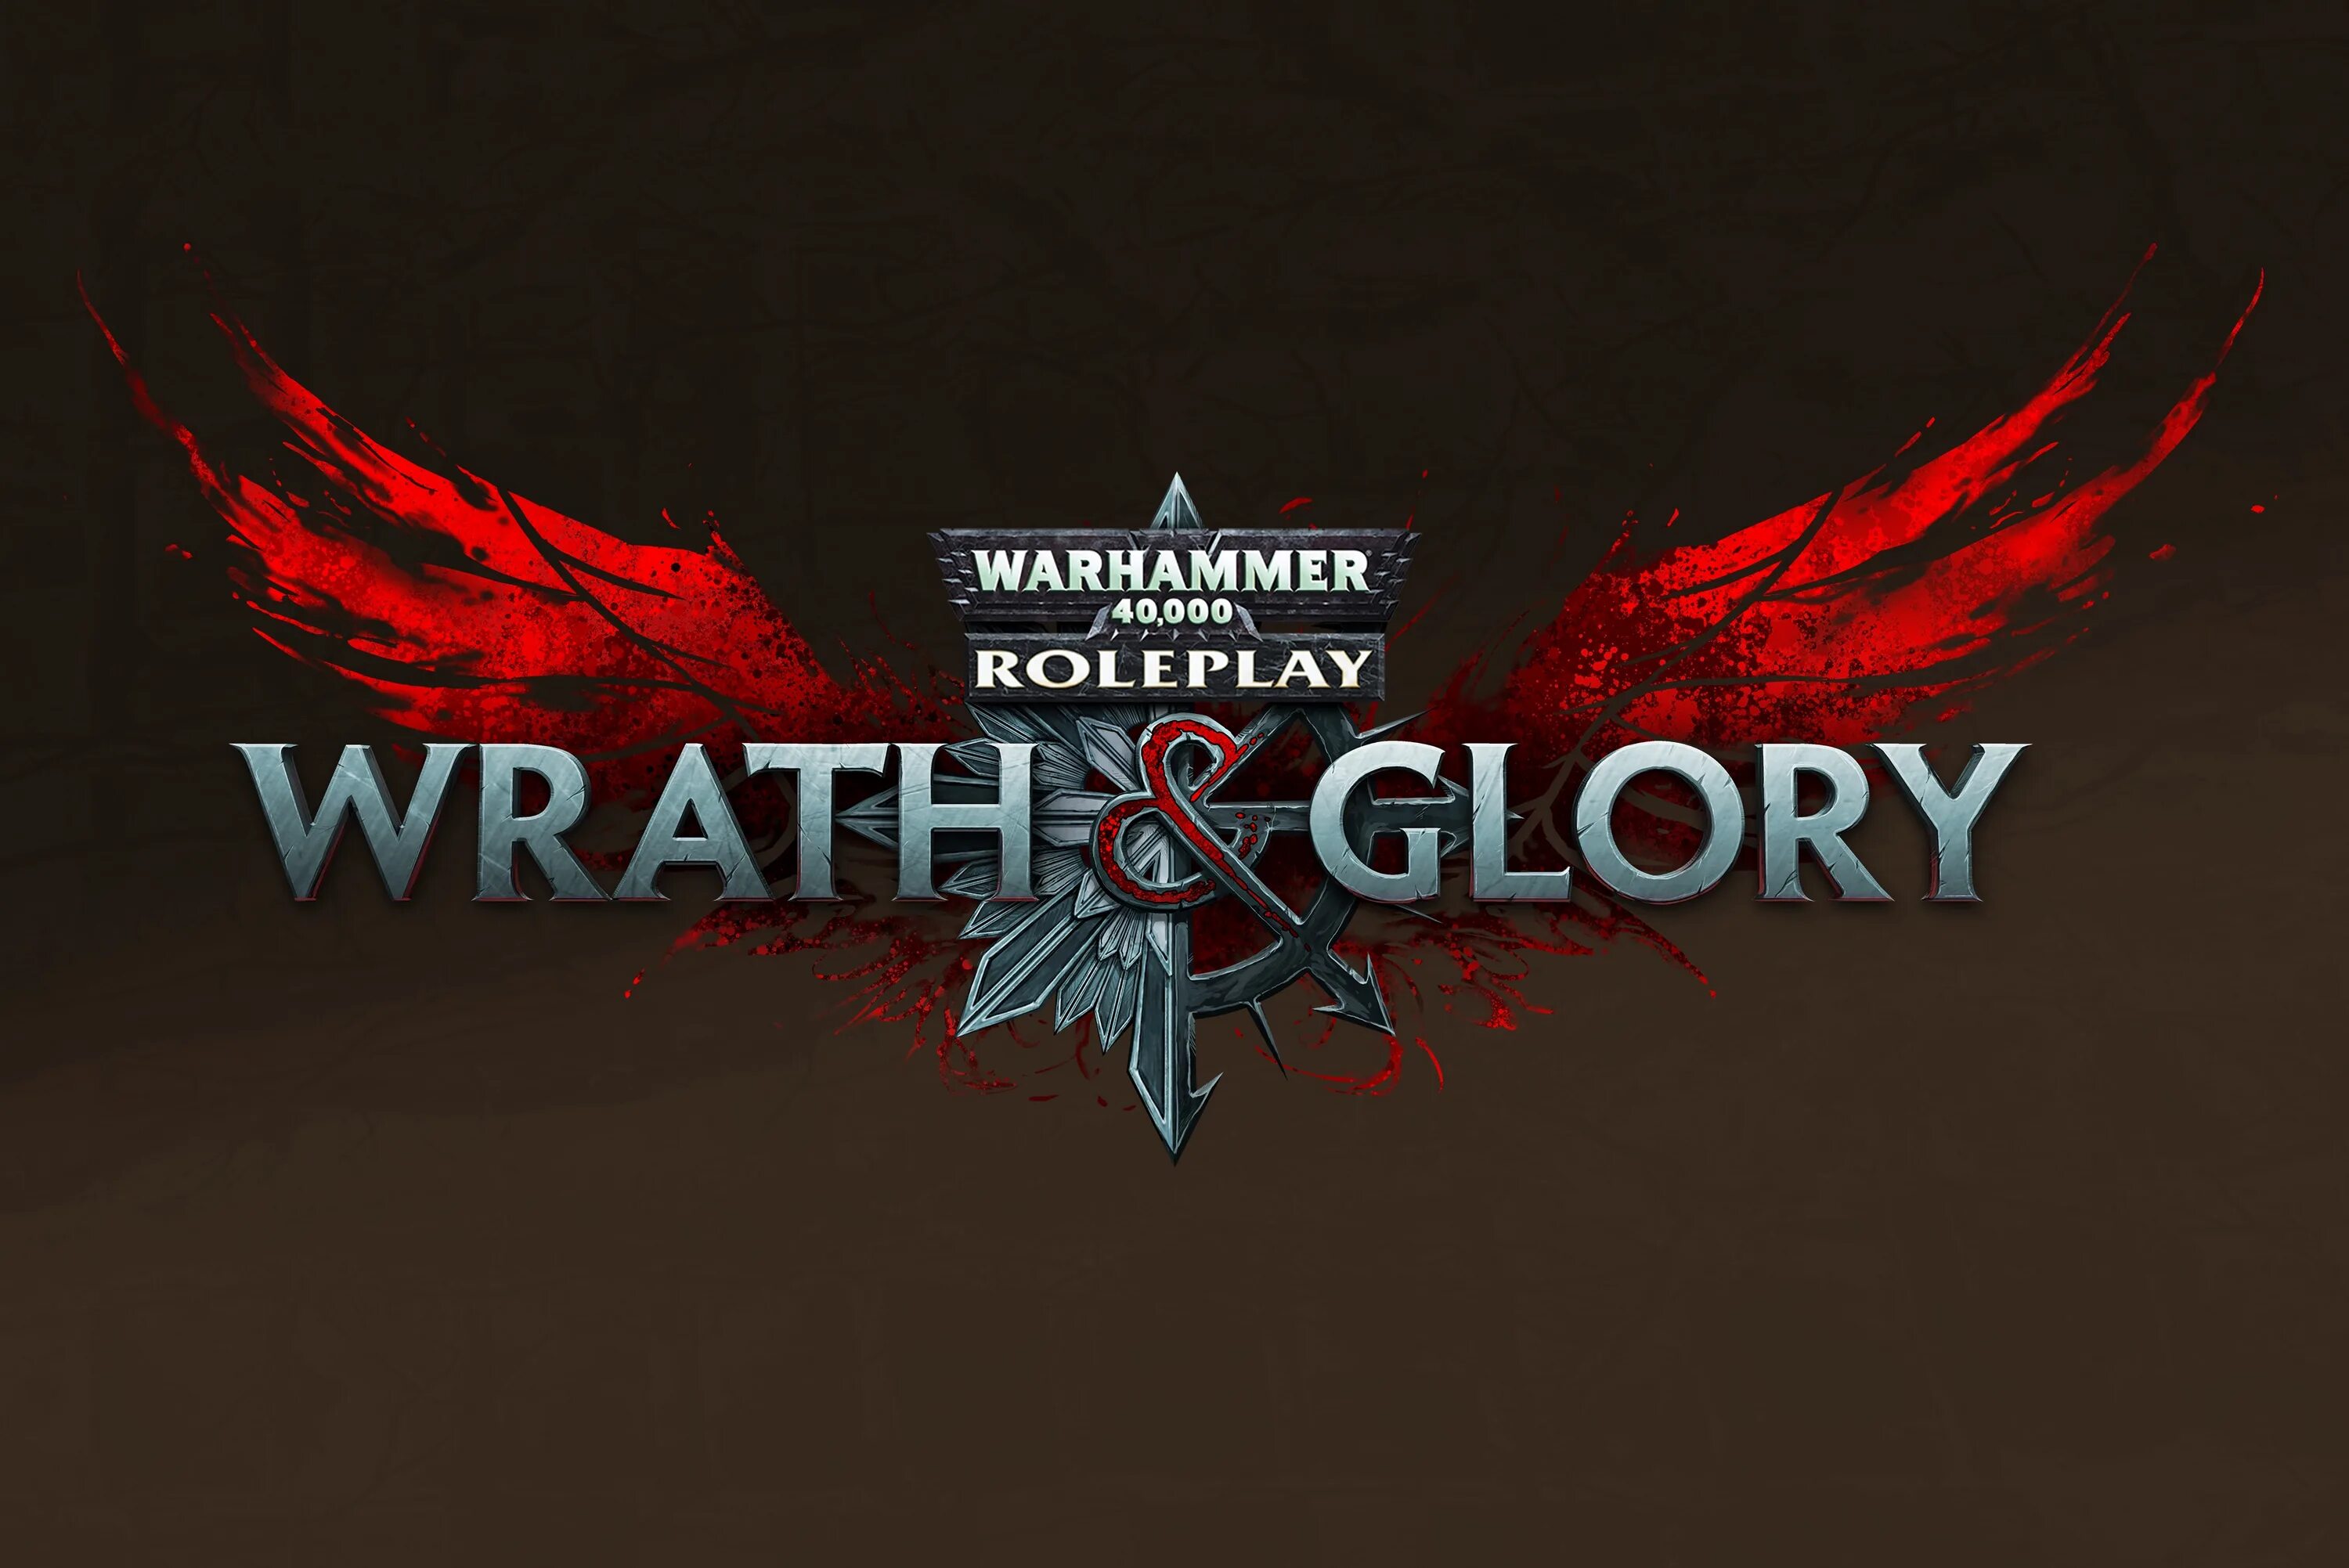 Wrath and Glory. Warhammer 40k Wrath and Glory. Wrath & Glory (гнев и Слава). Warhammer 40,000 Roleplay карты.